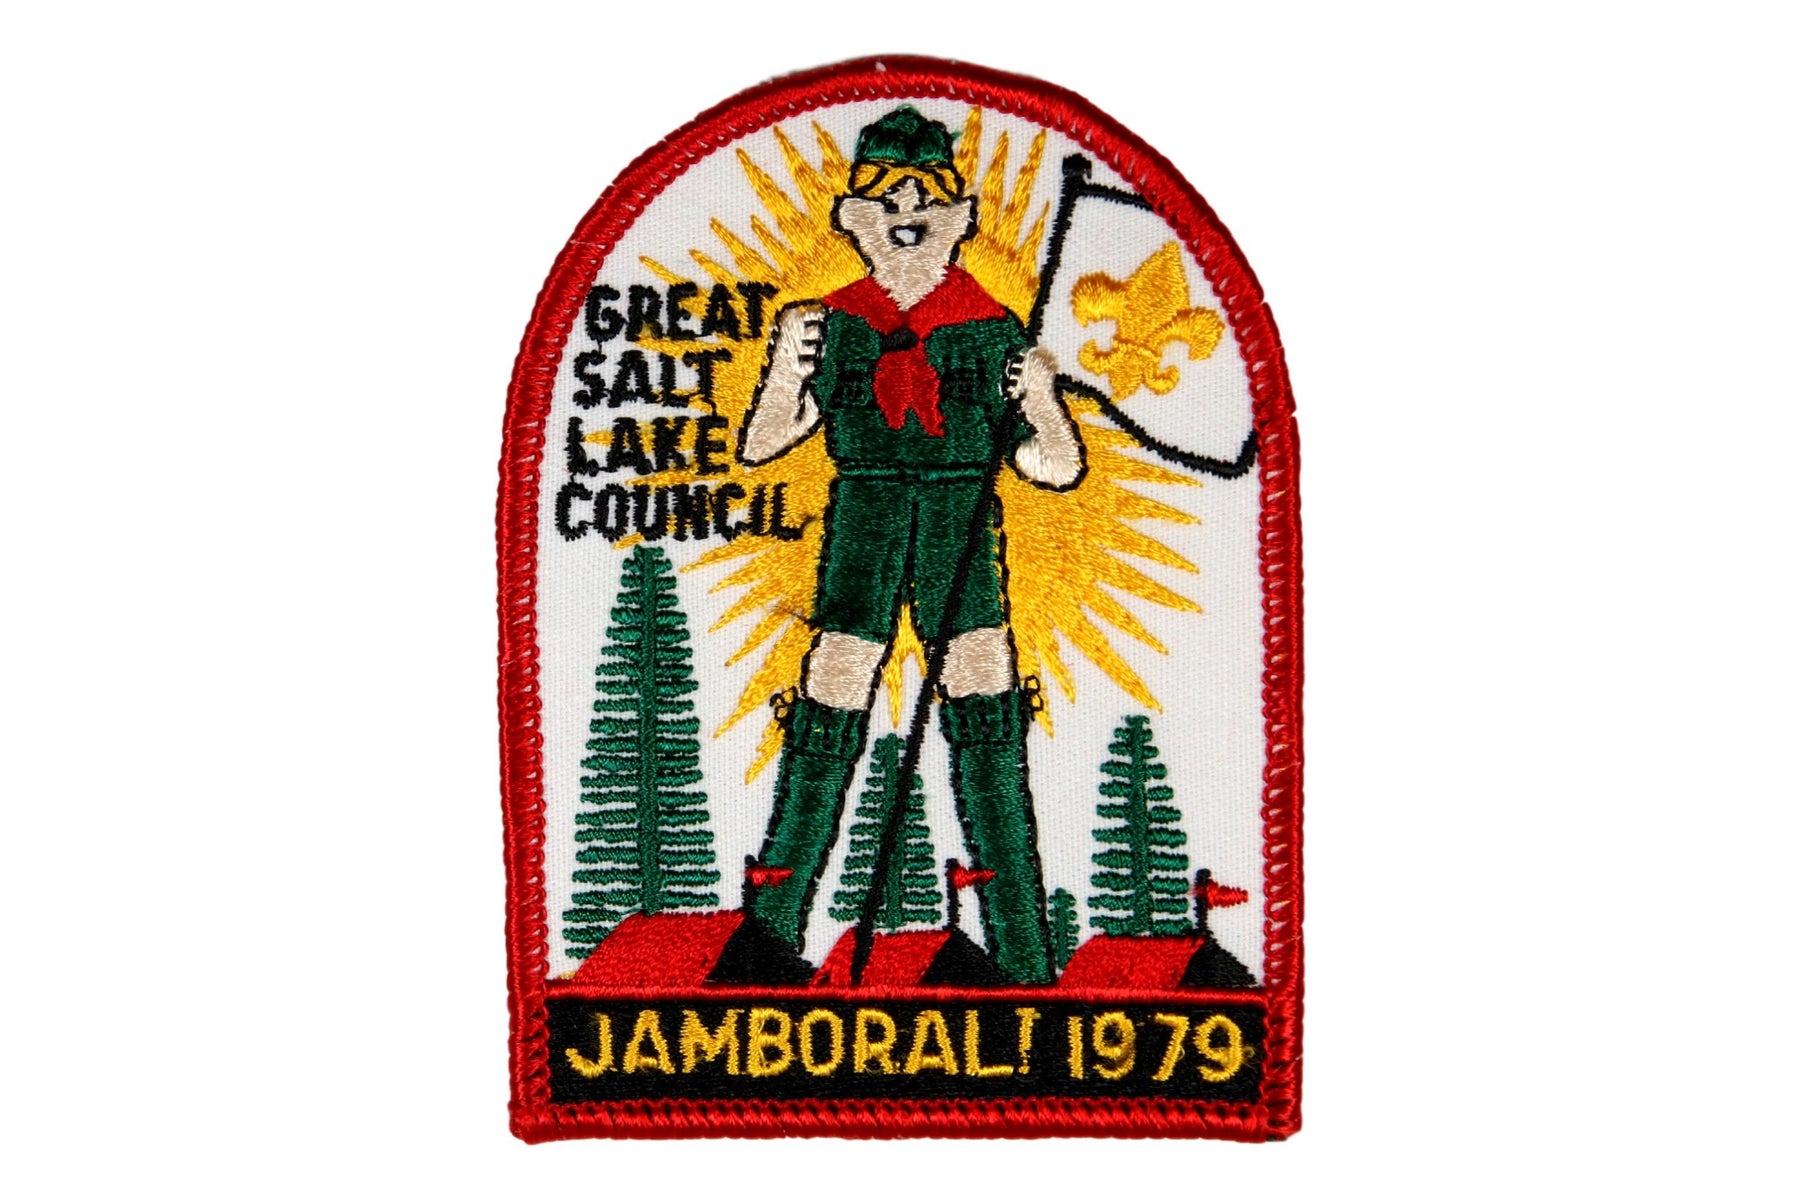 1979 Great Salt Lake Jamboral Patch